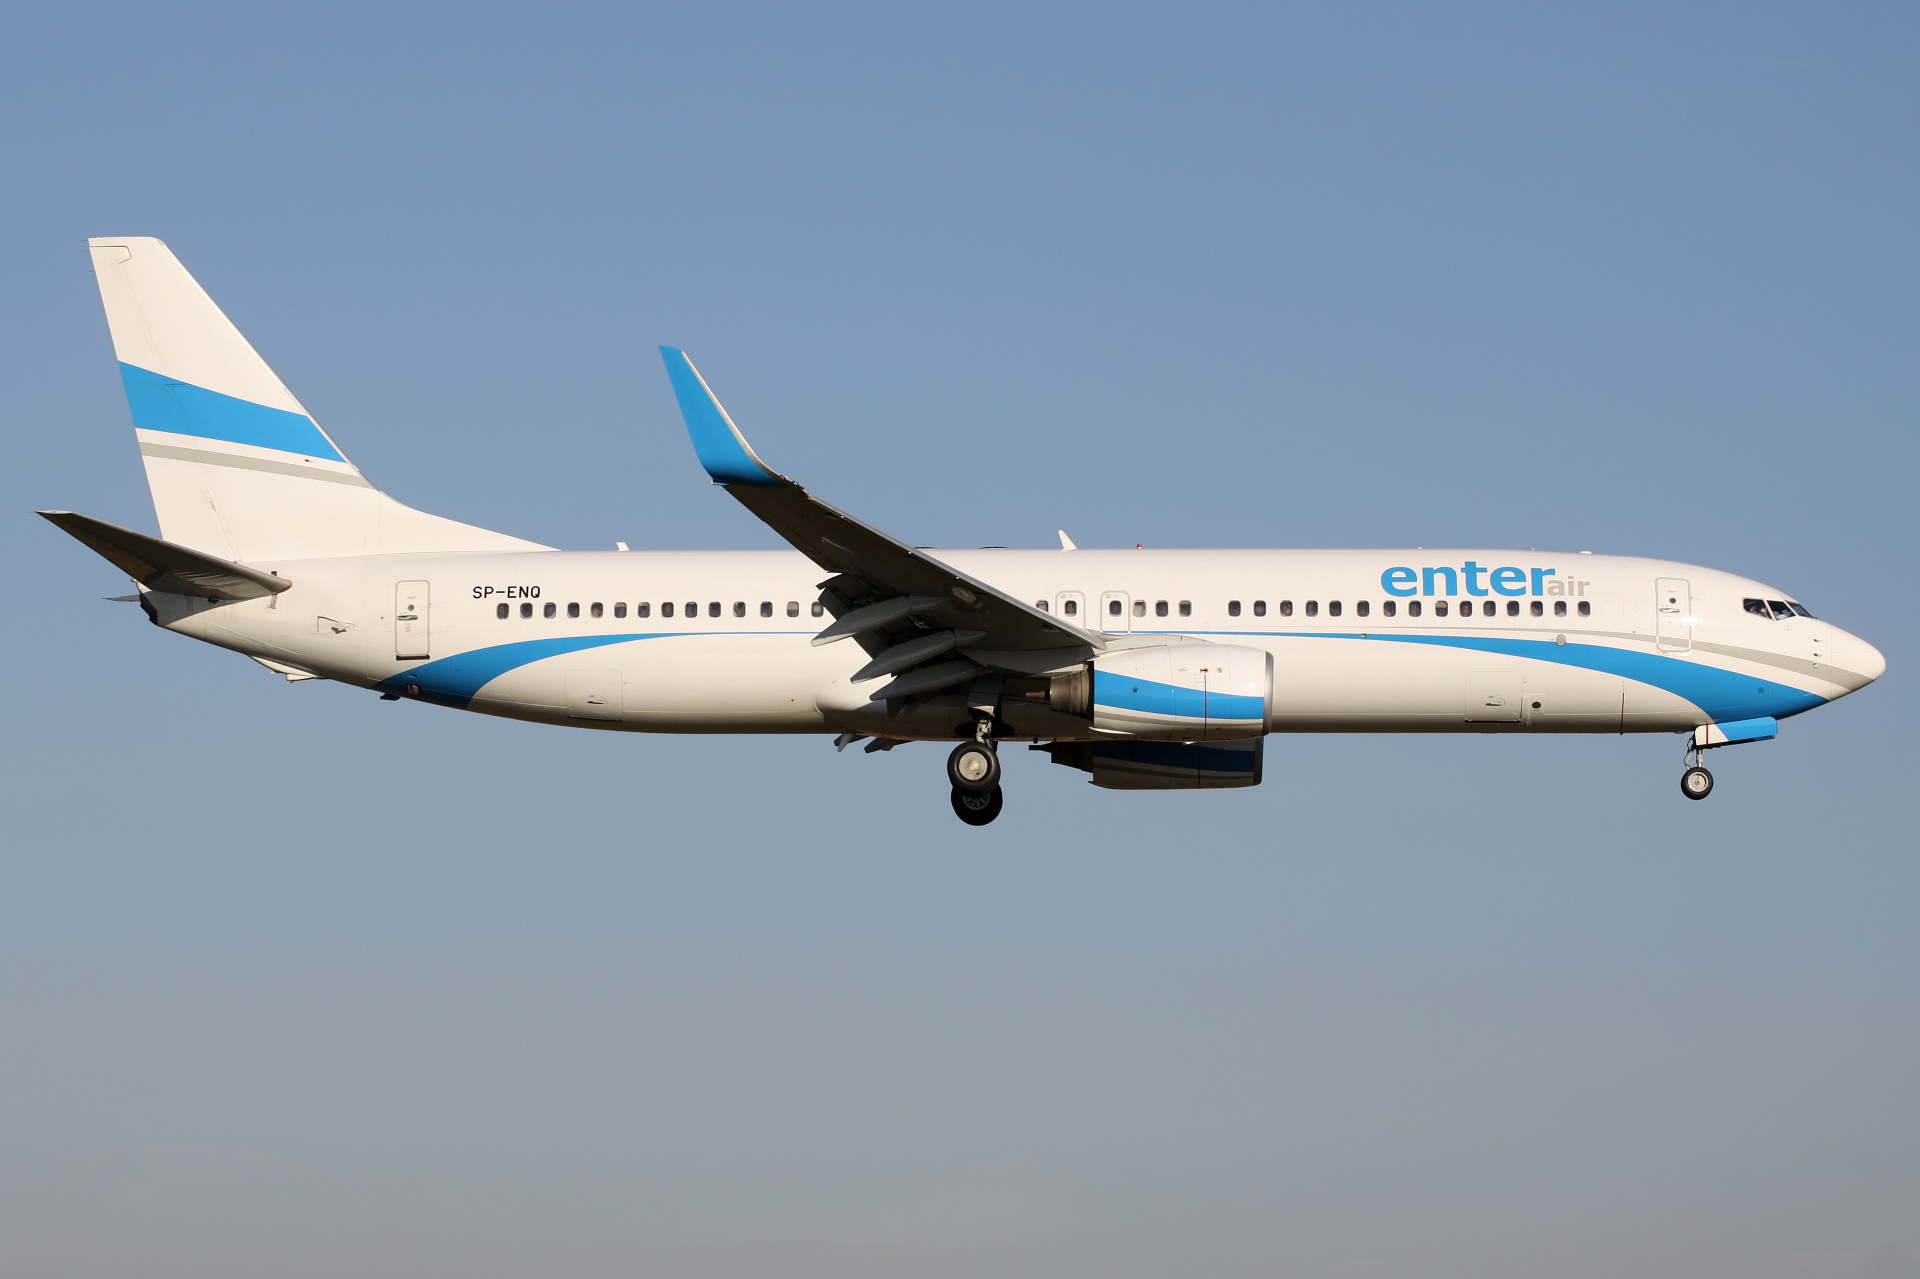 SP-ENQ (Samoloty » Spotting na EPWA » Boeing 737-800 » Enter Air)